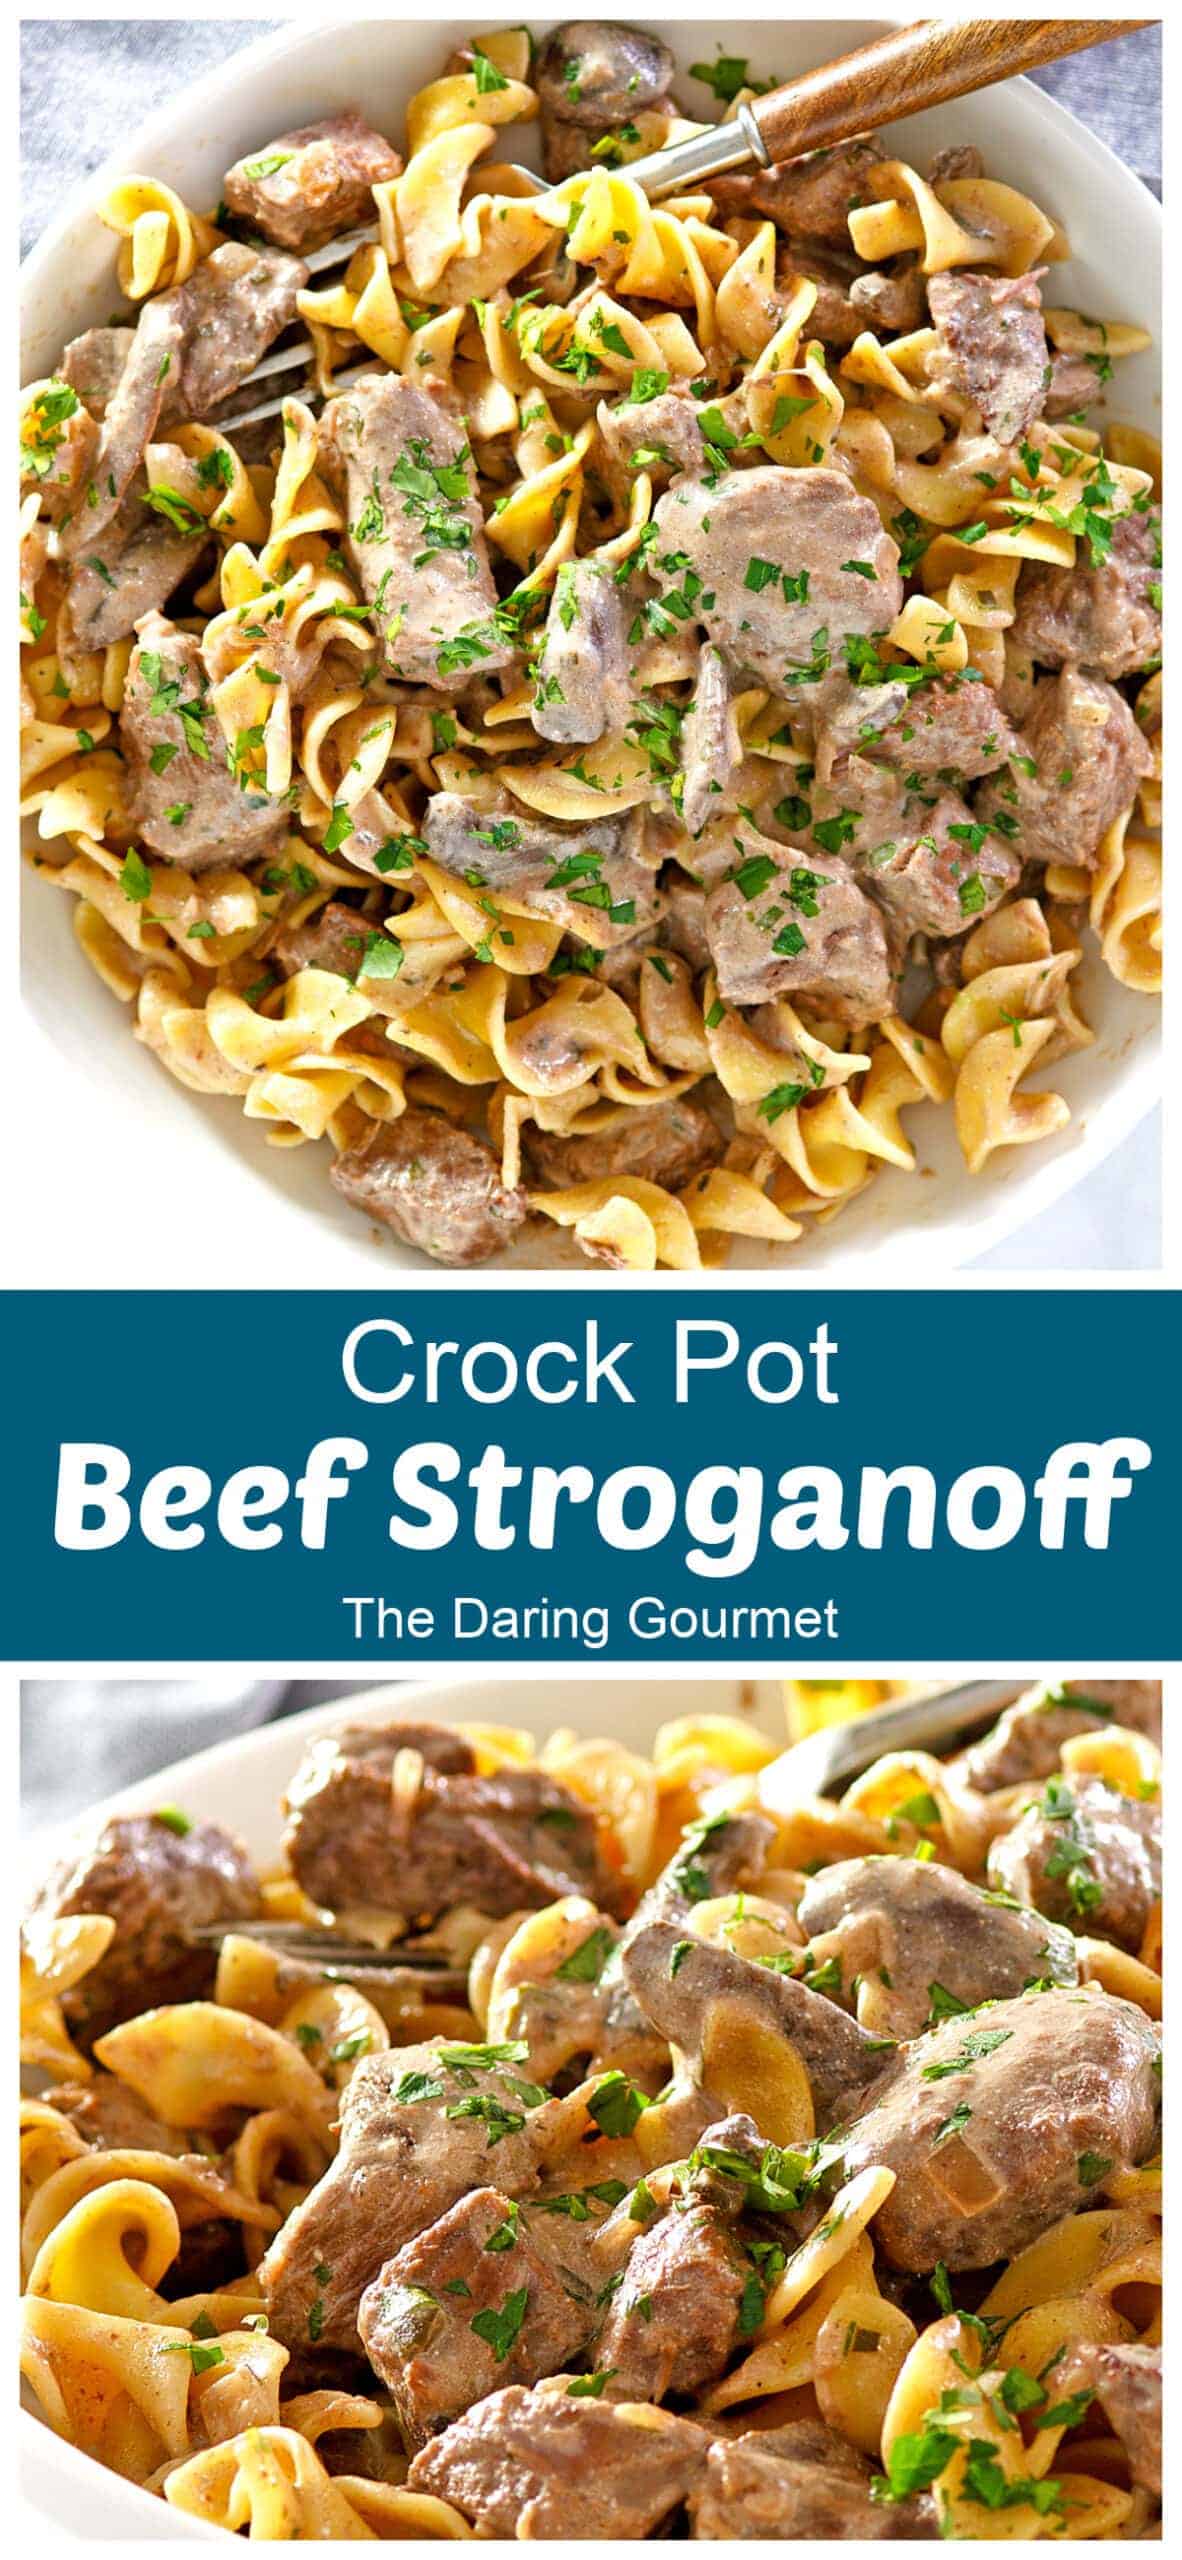 crock pot beef stroganoff recipe slow cooker best from scratch